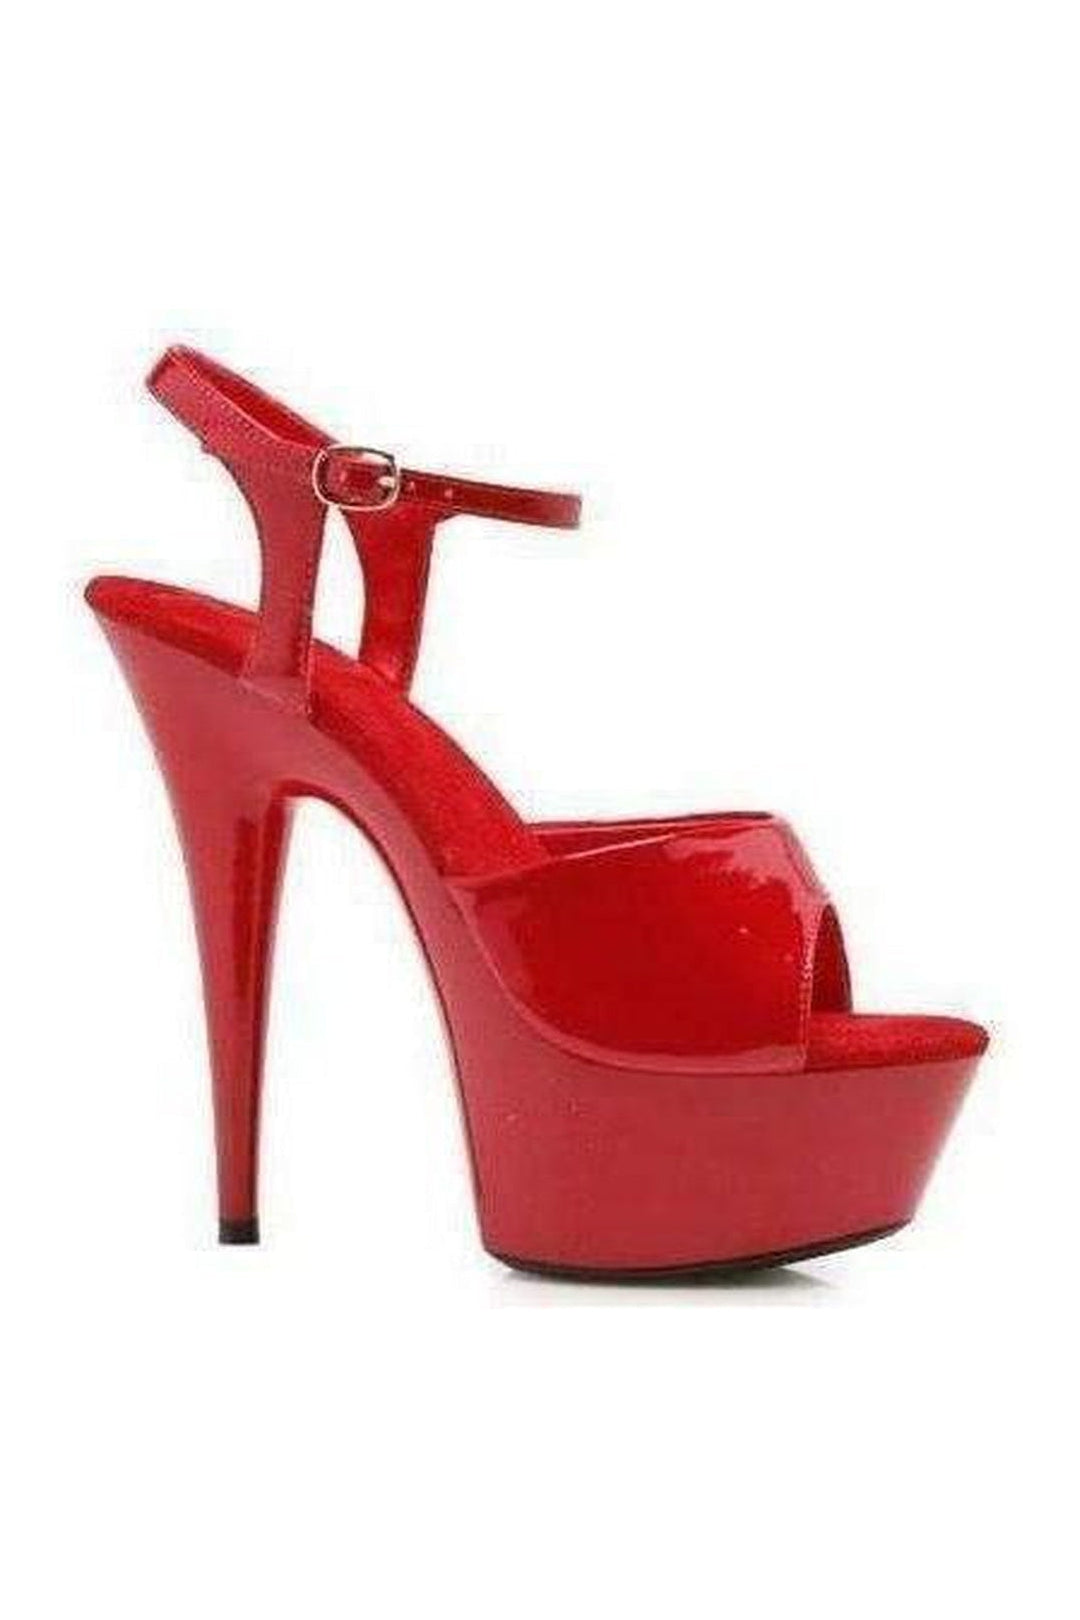 609-JULIET Platform Sandal | Red Patent-Ellie Shoes-Red-Sandals-SEXYSHOES.COM